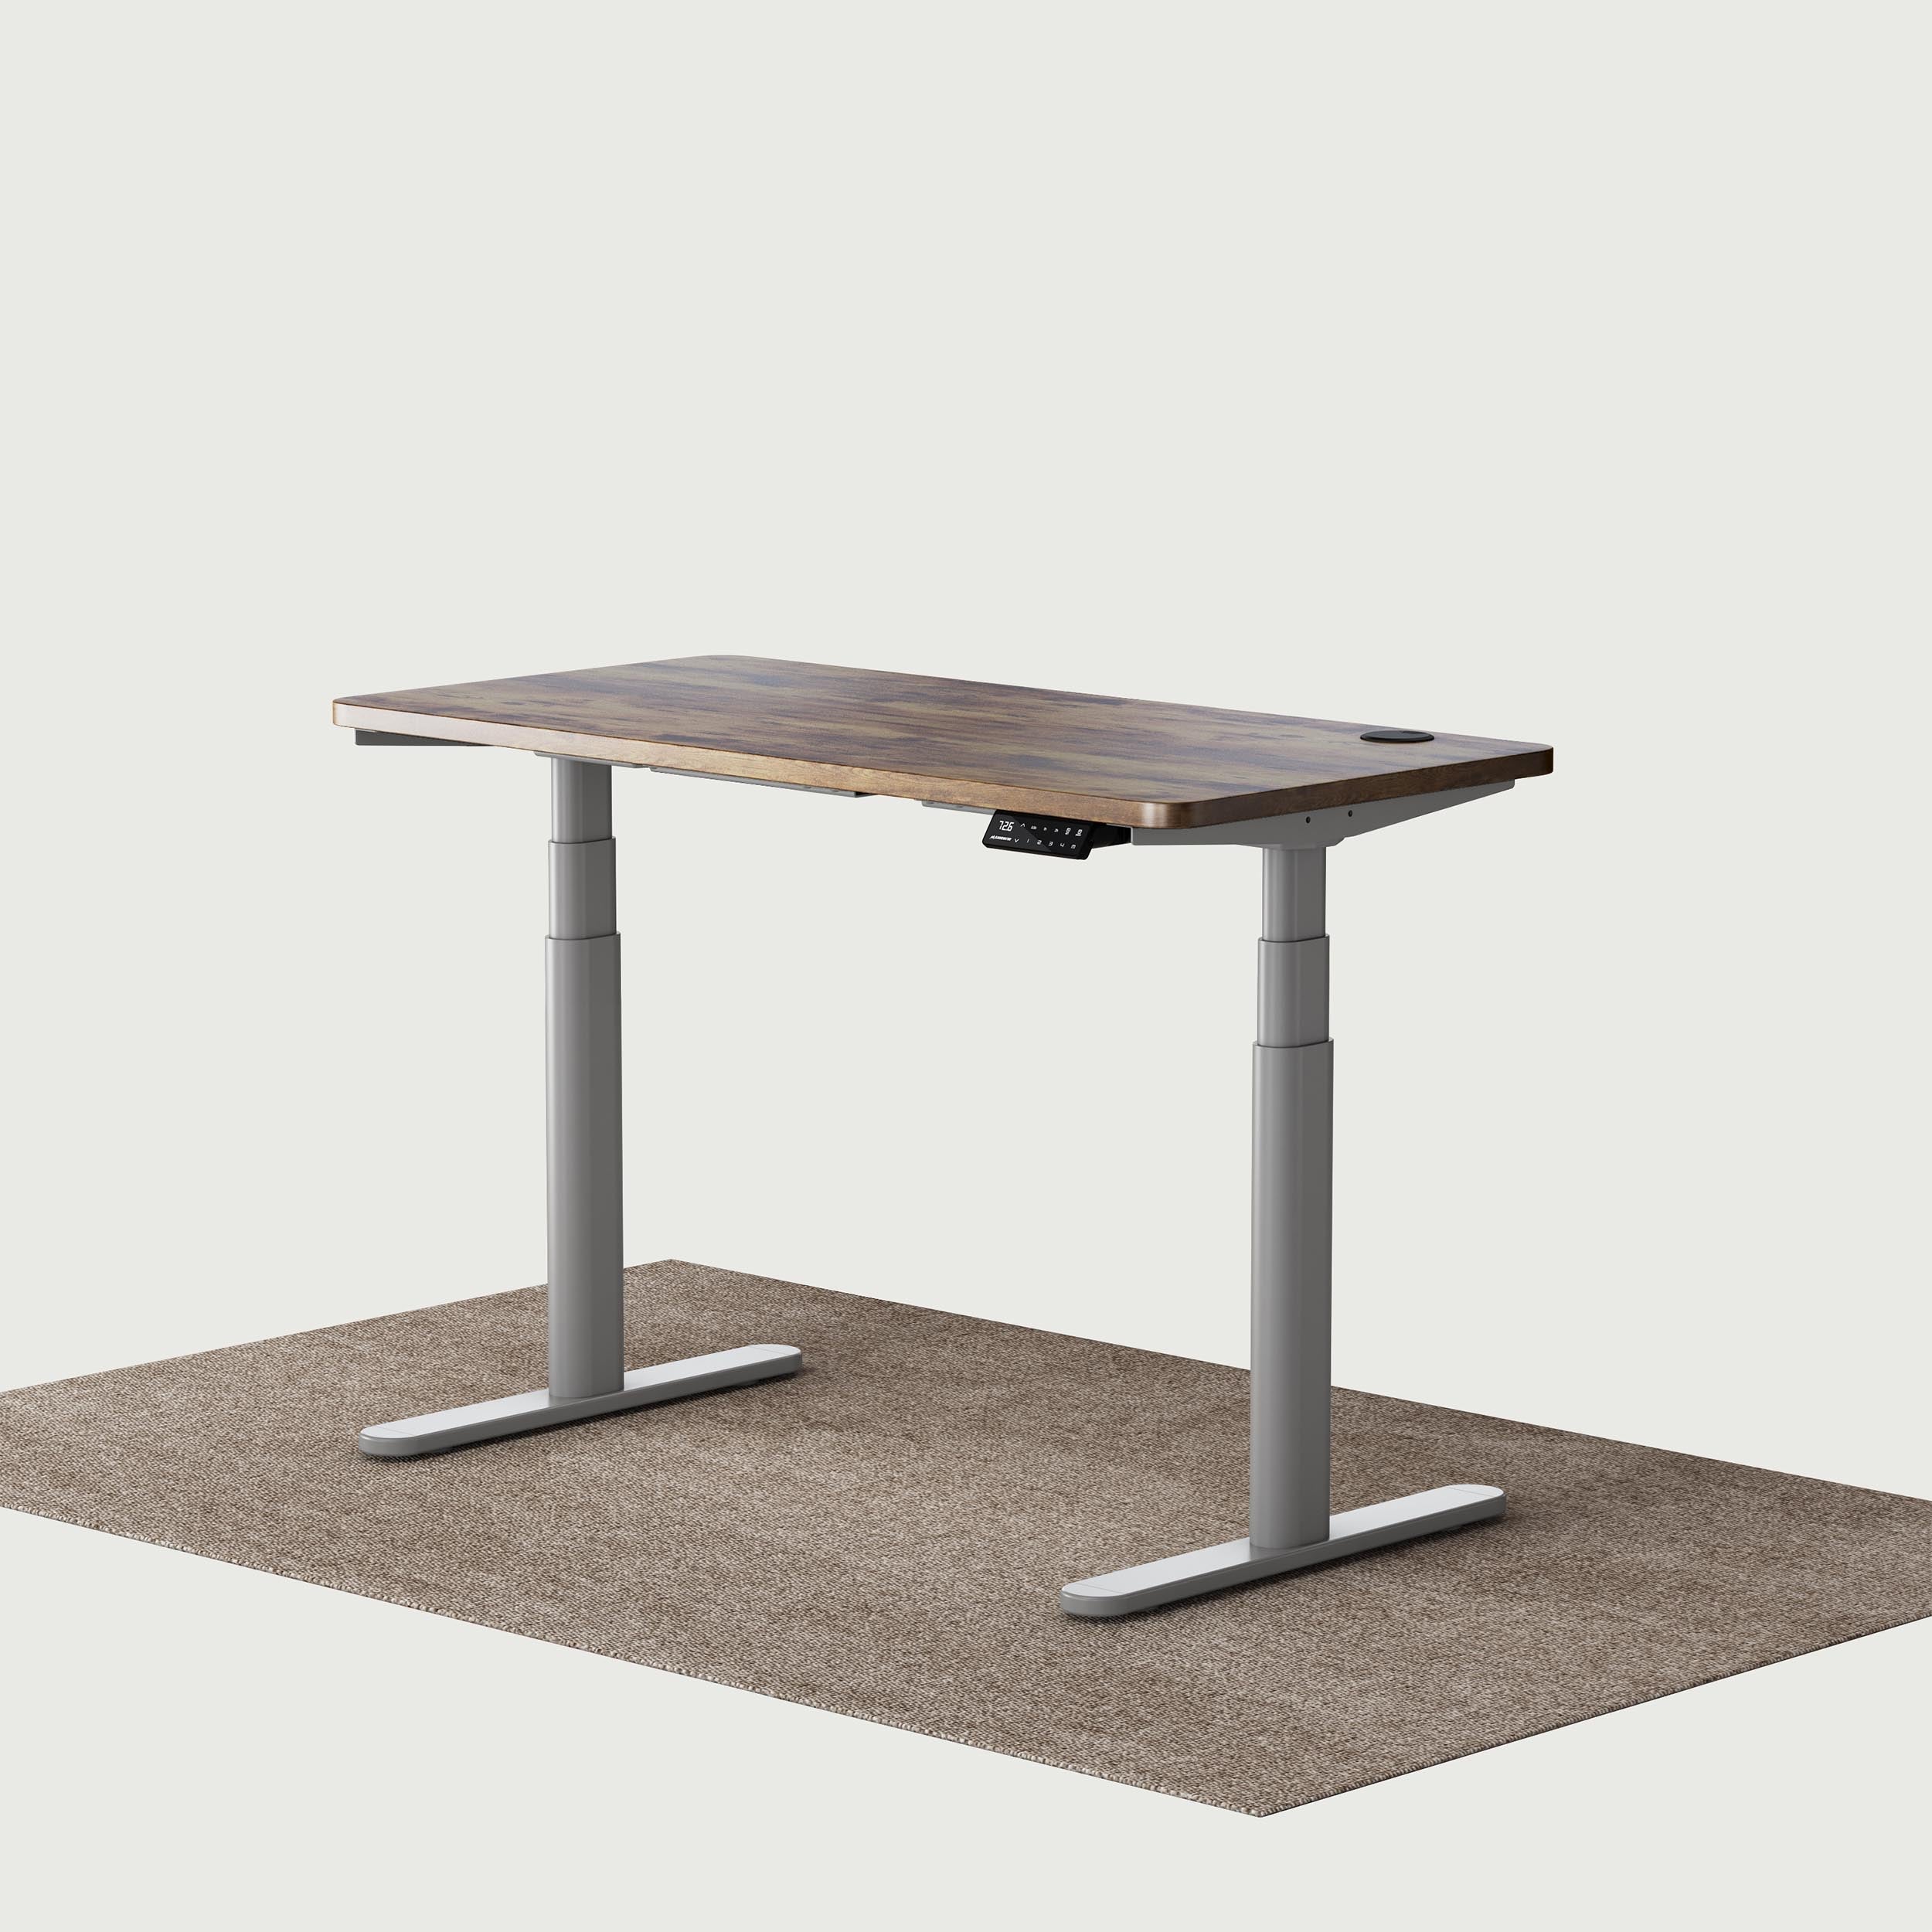 TH2 Pro Plus grey oval electric standing desk frame with vintage 120x60 cm desktop